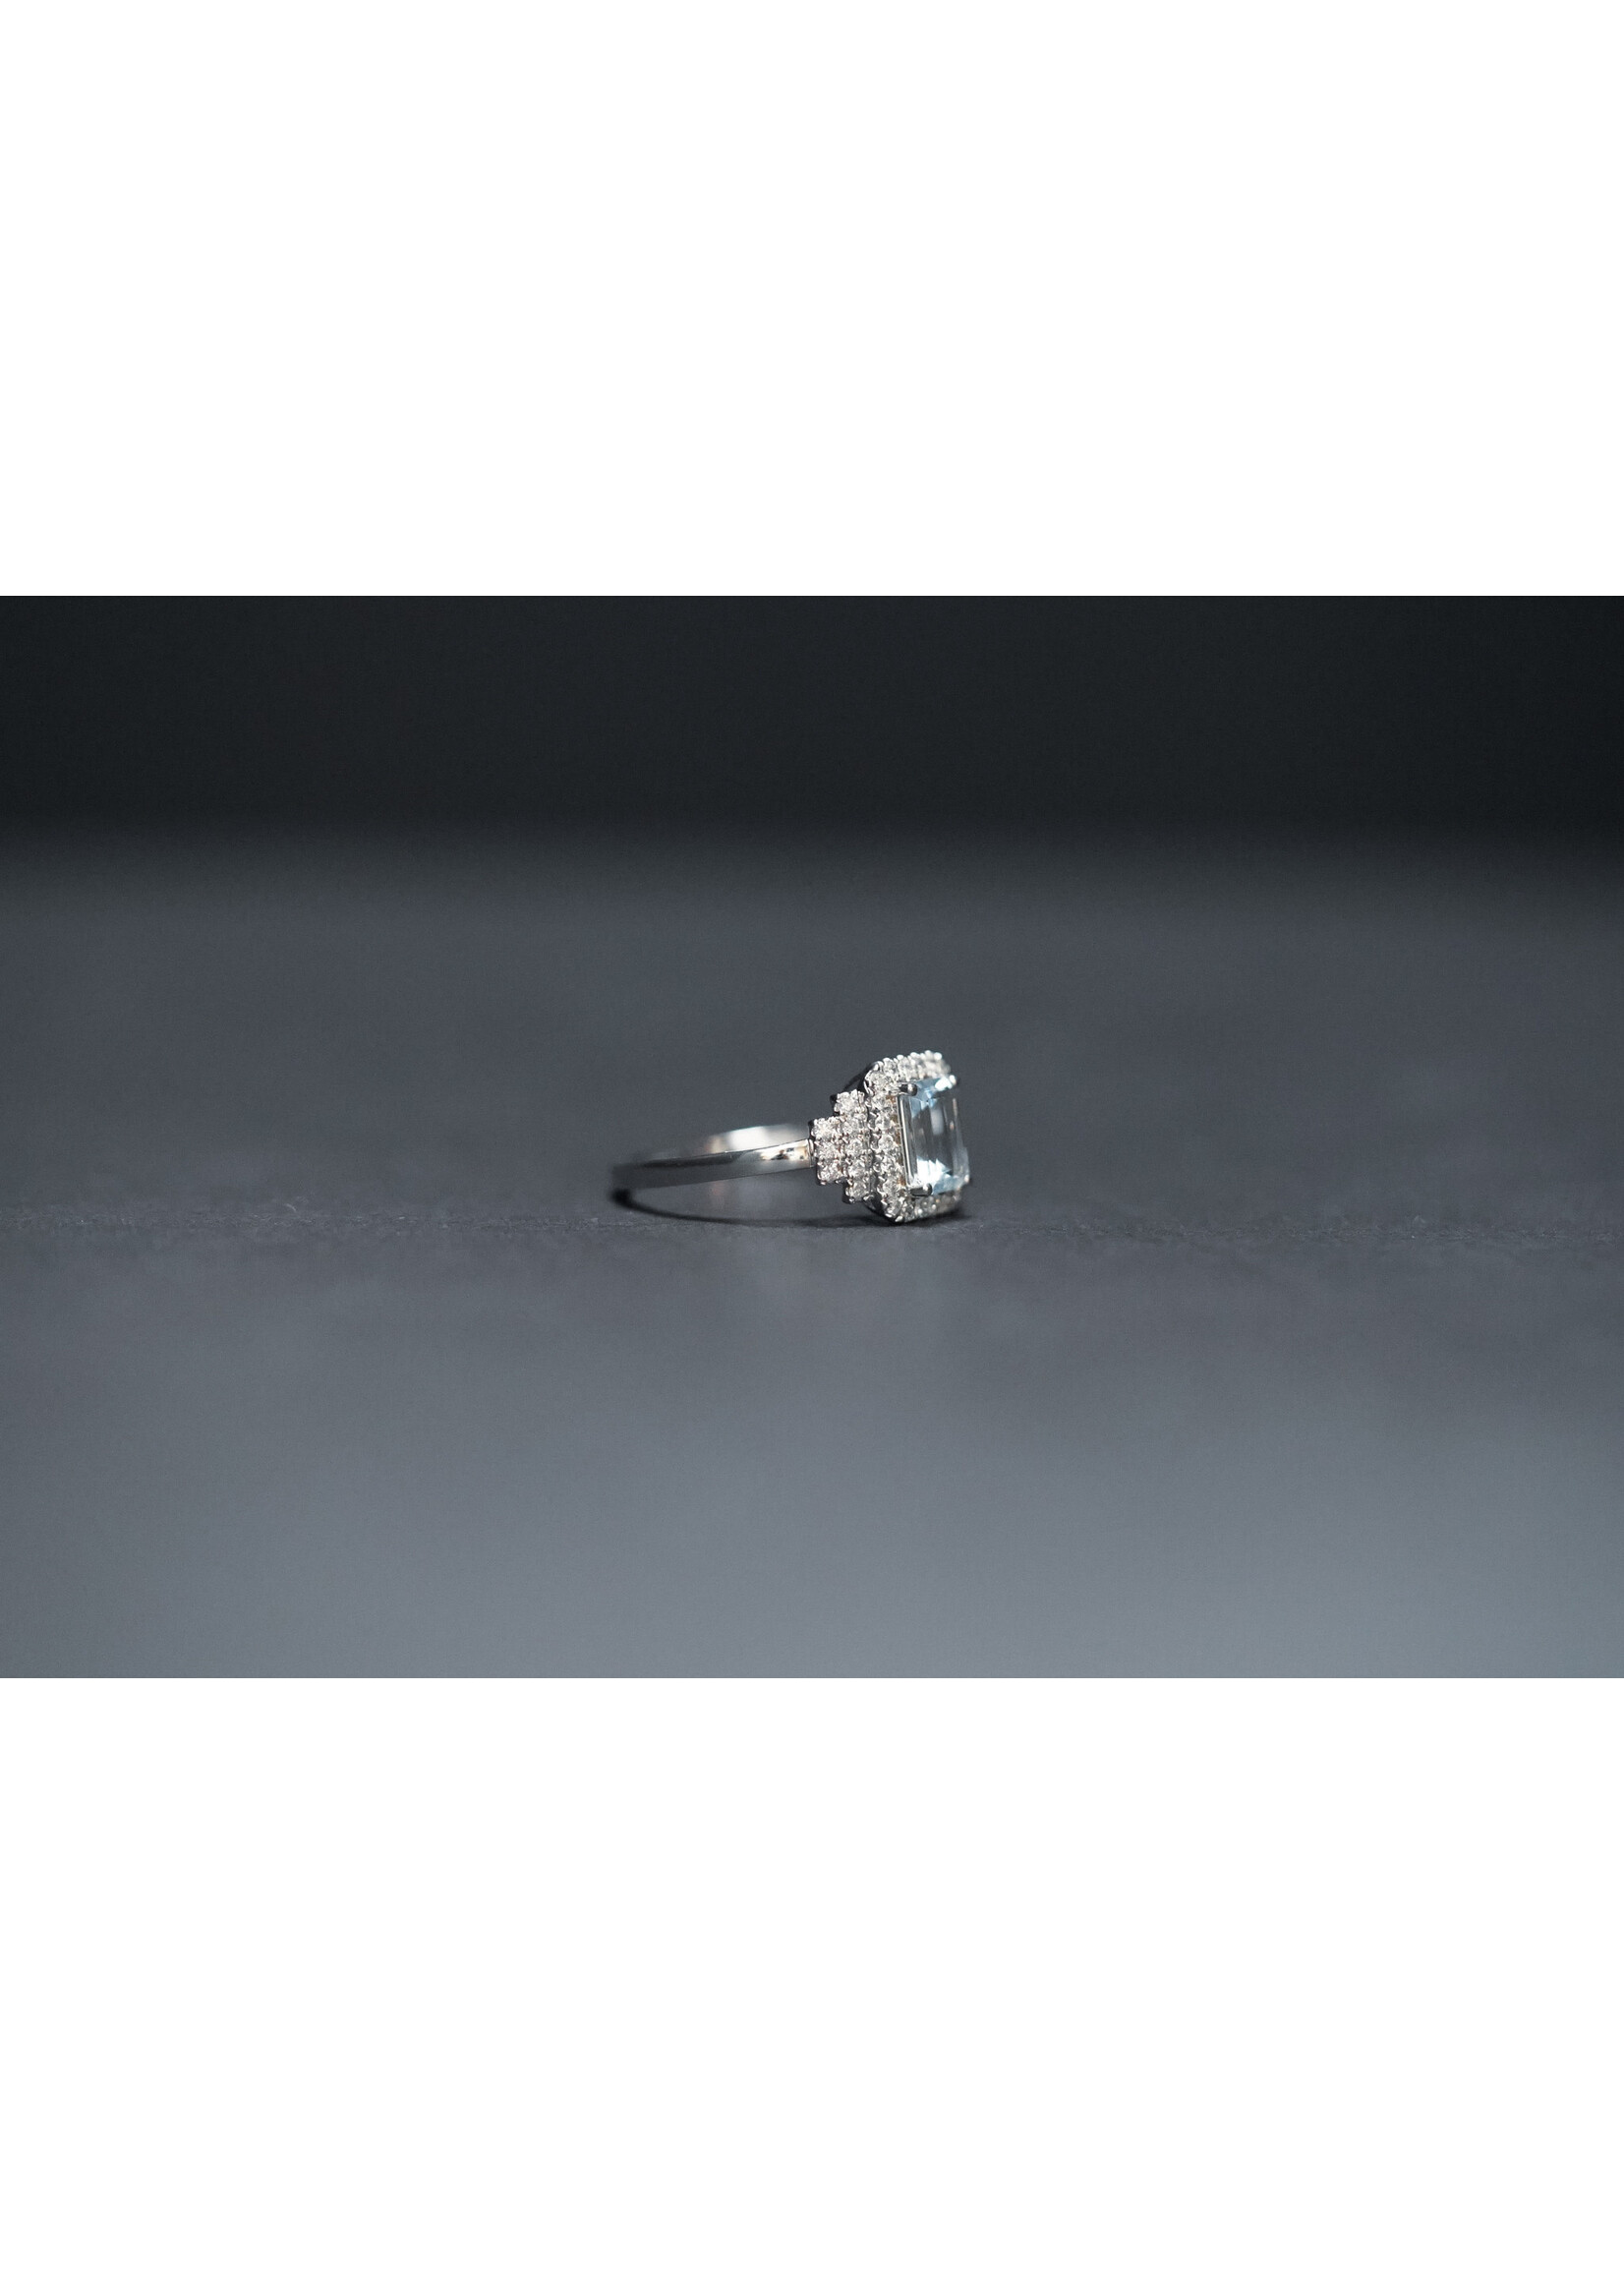 14KW 2.30g 1.20ctw (.90ctr) Aquamarine & Diamond Fashion Ring (size 7)